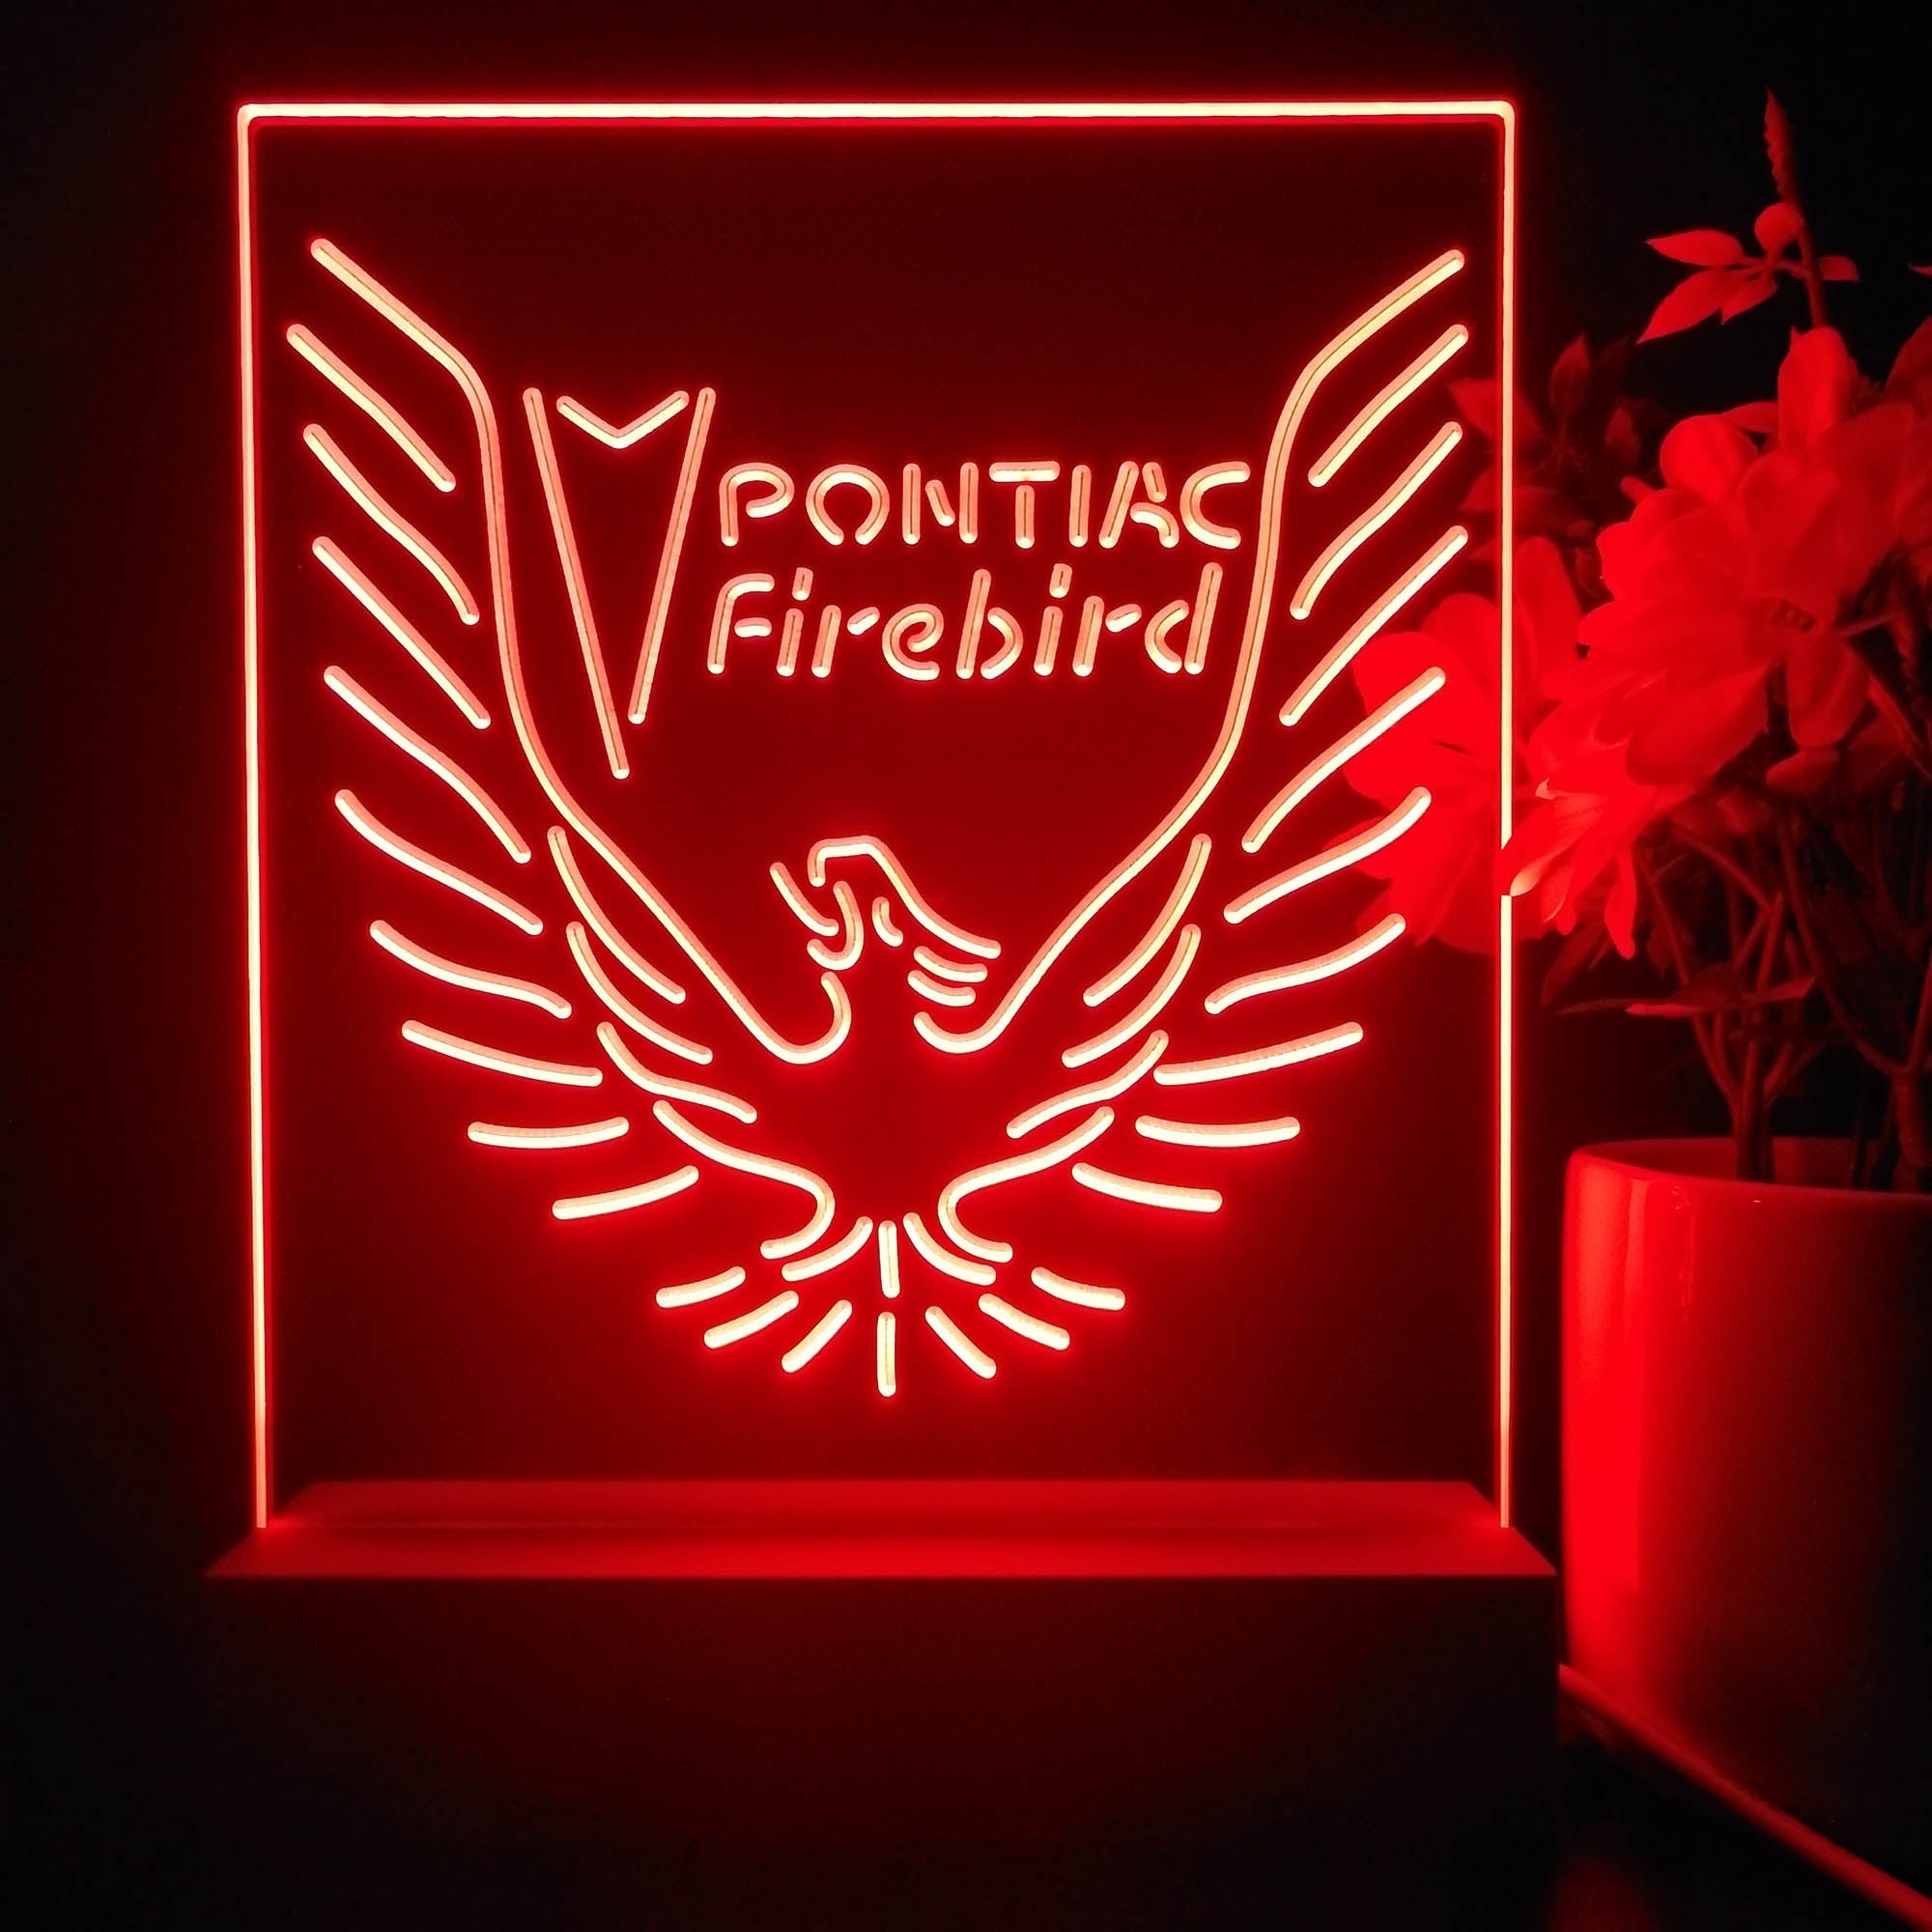 Pontiacs Firebirds 3D Illusion Night Light Desk Lamp